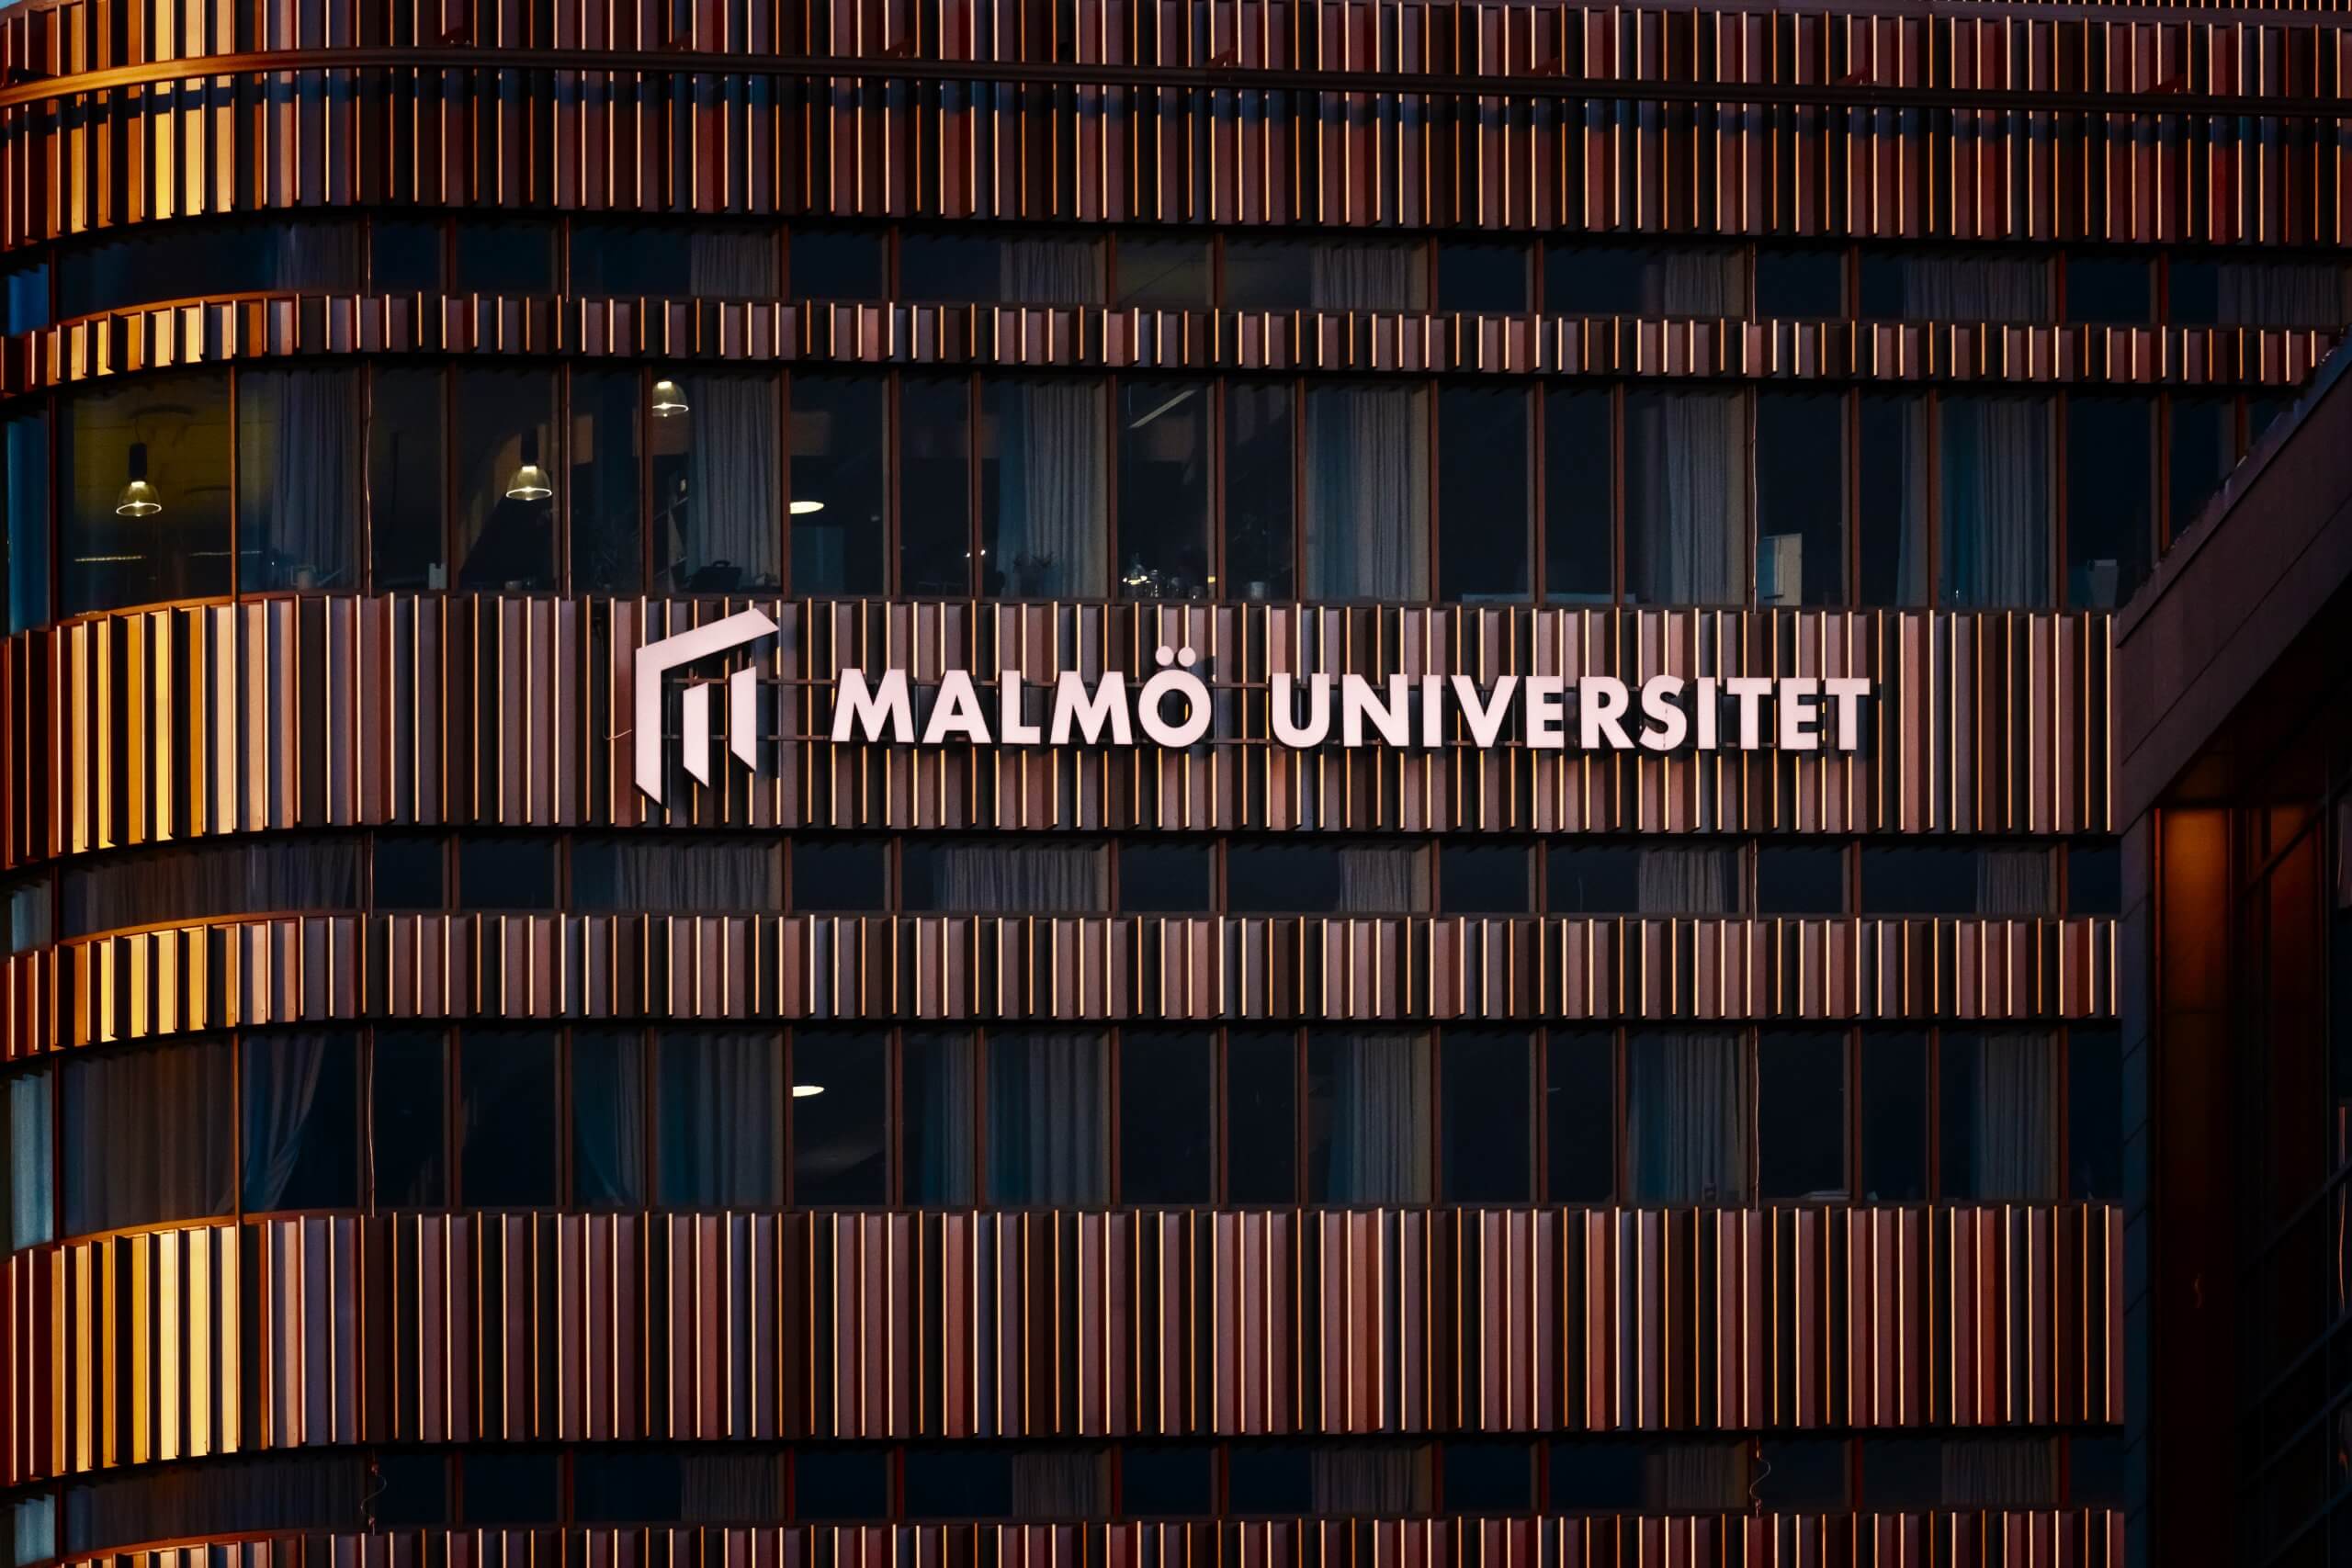 MalmÃ¶ University